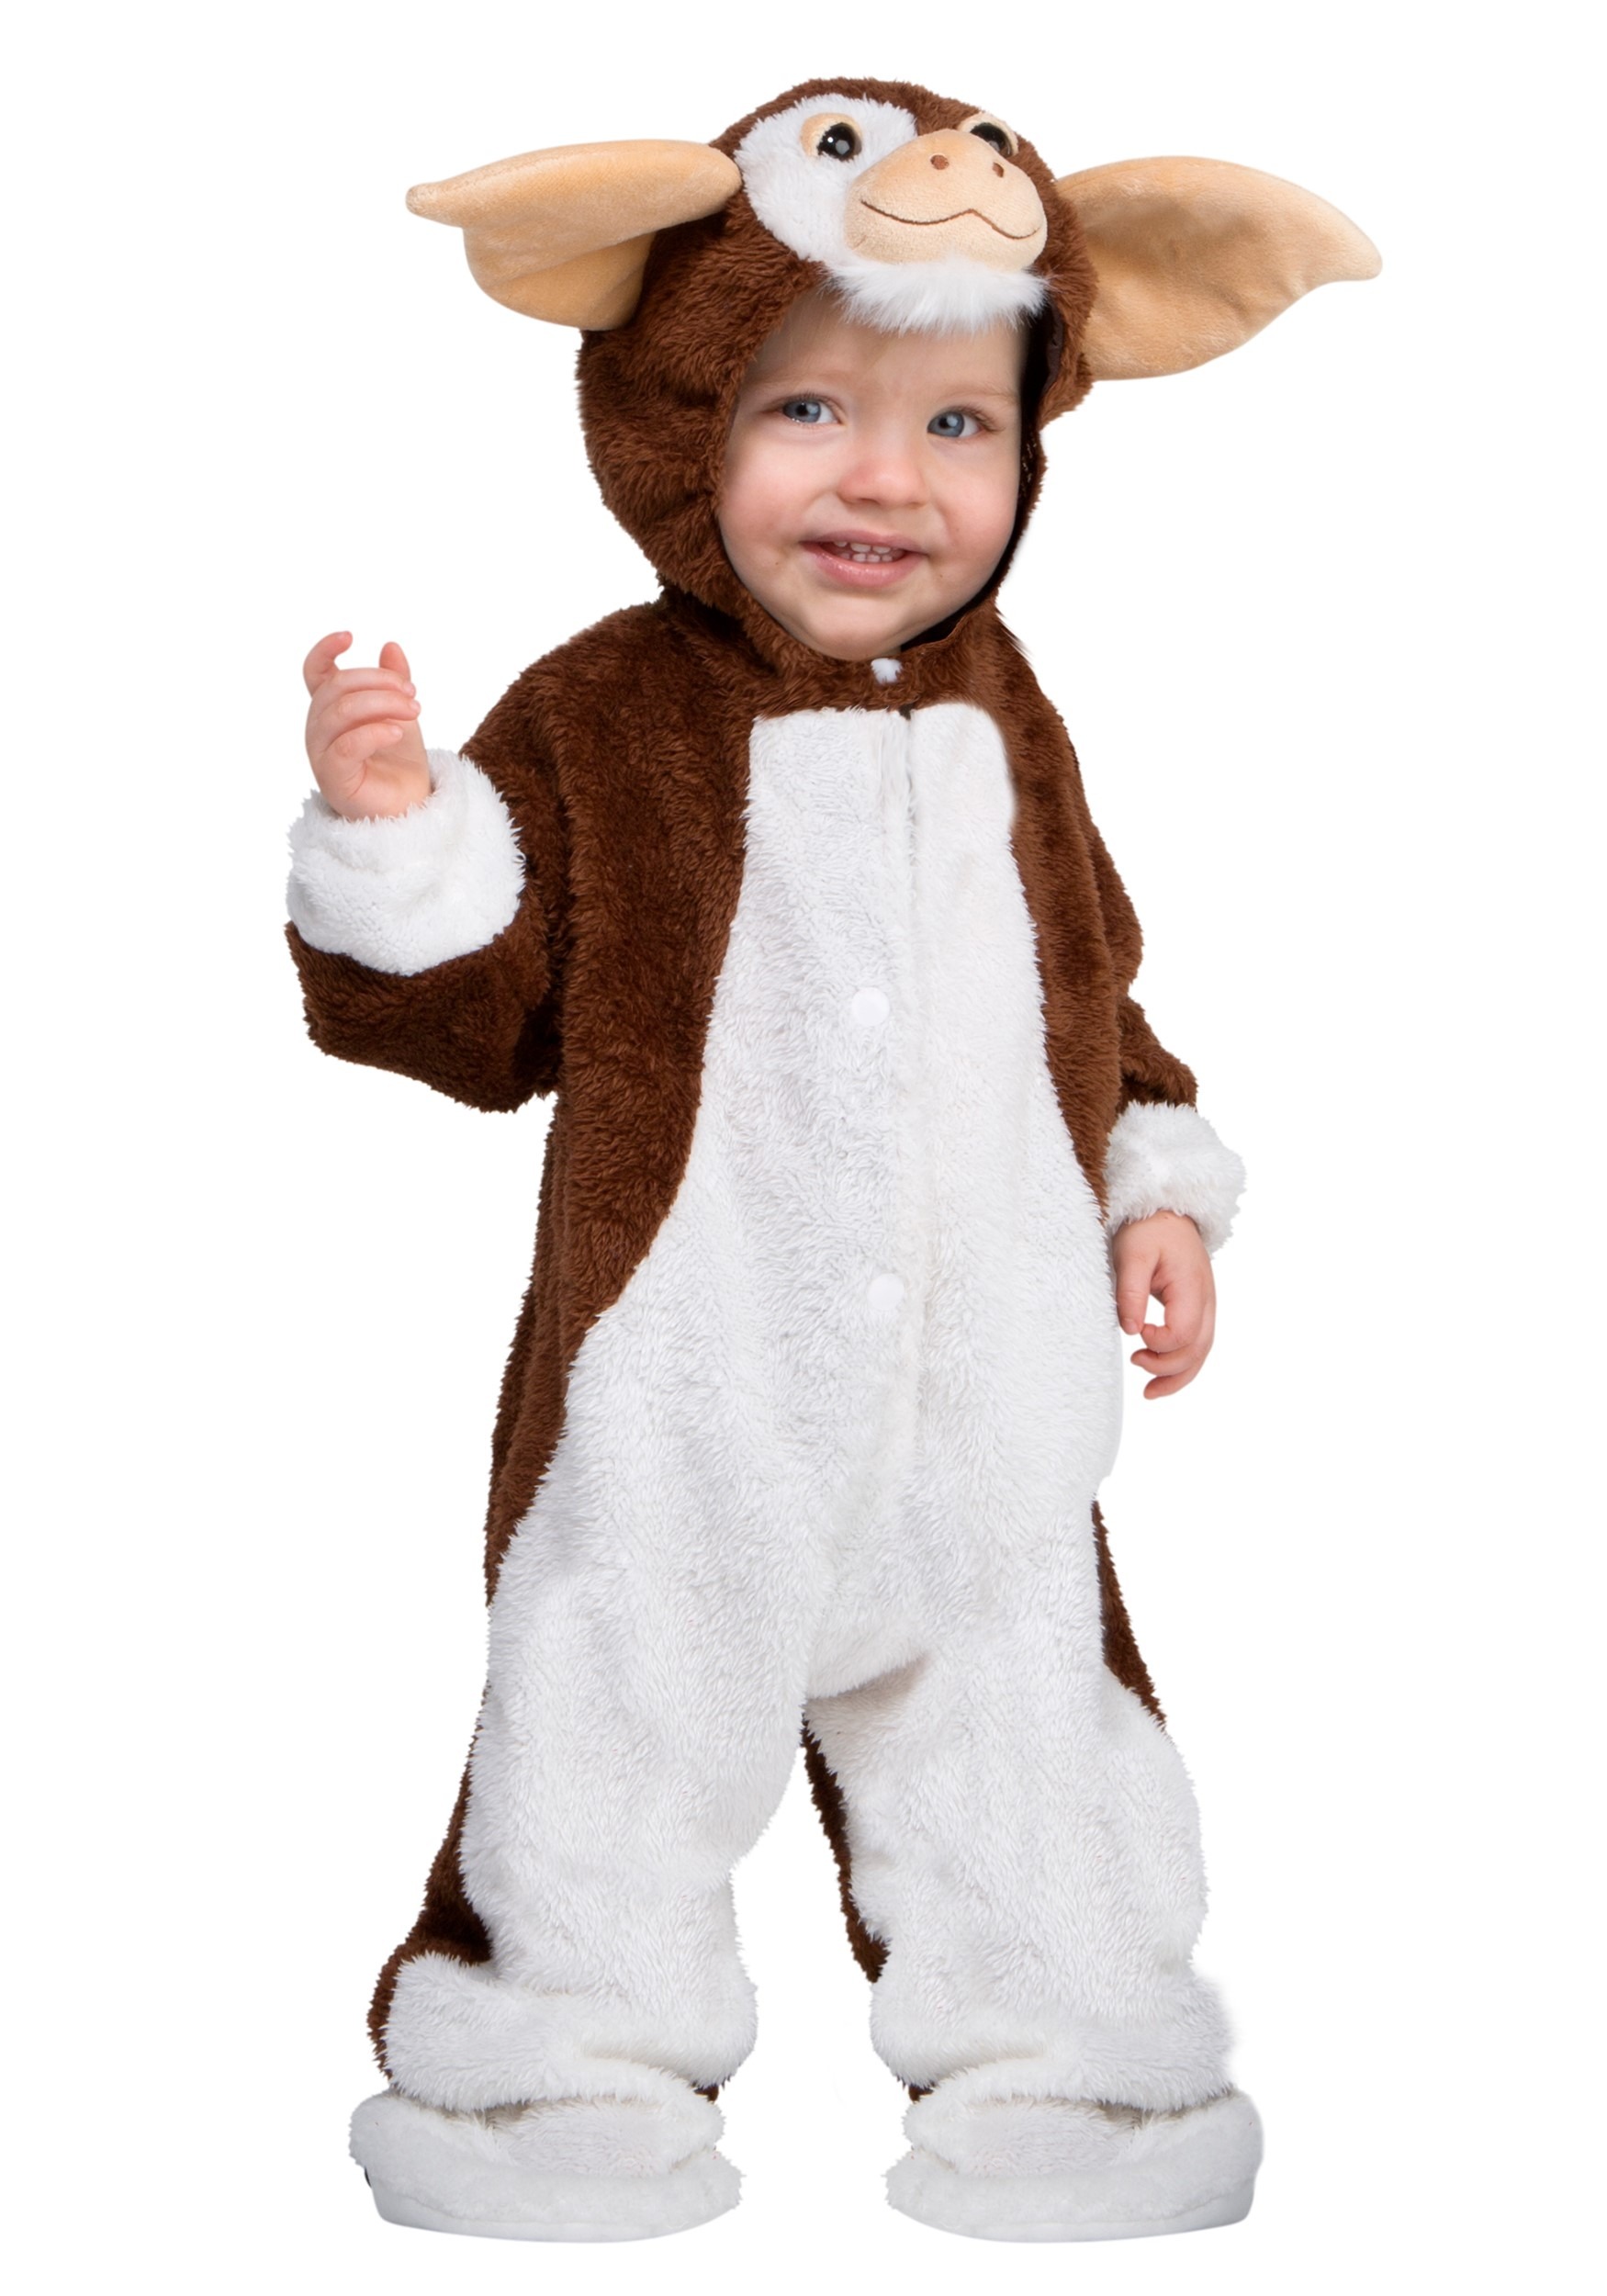 Mischief Maker Costume for Infant/Toddler